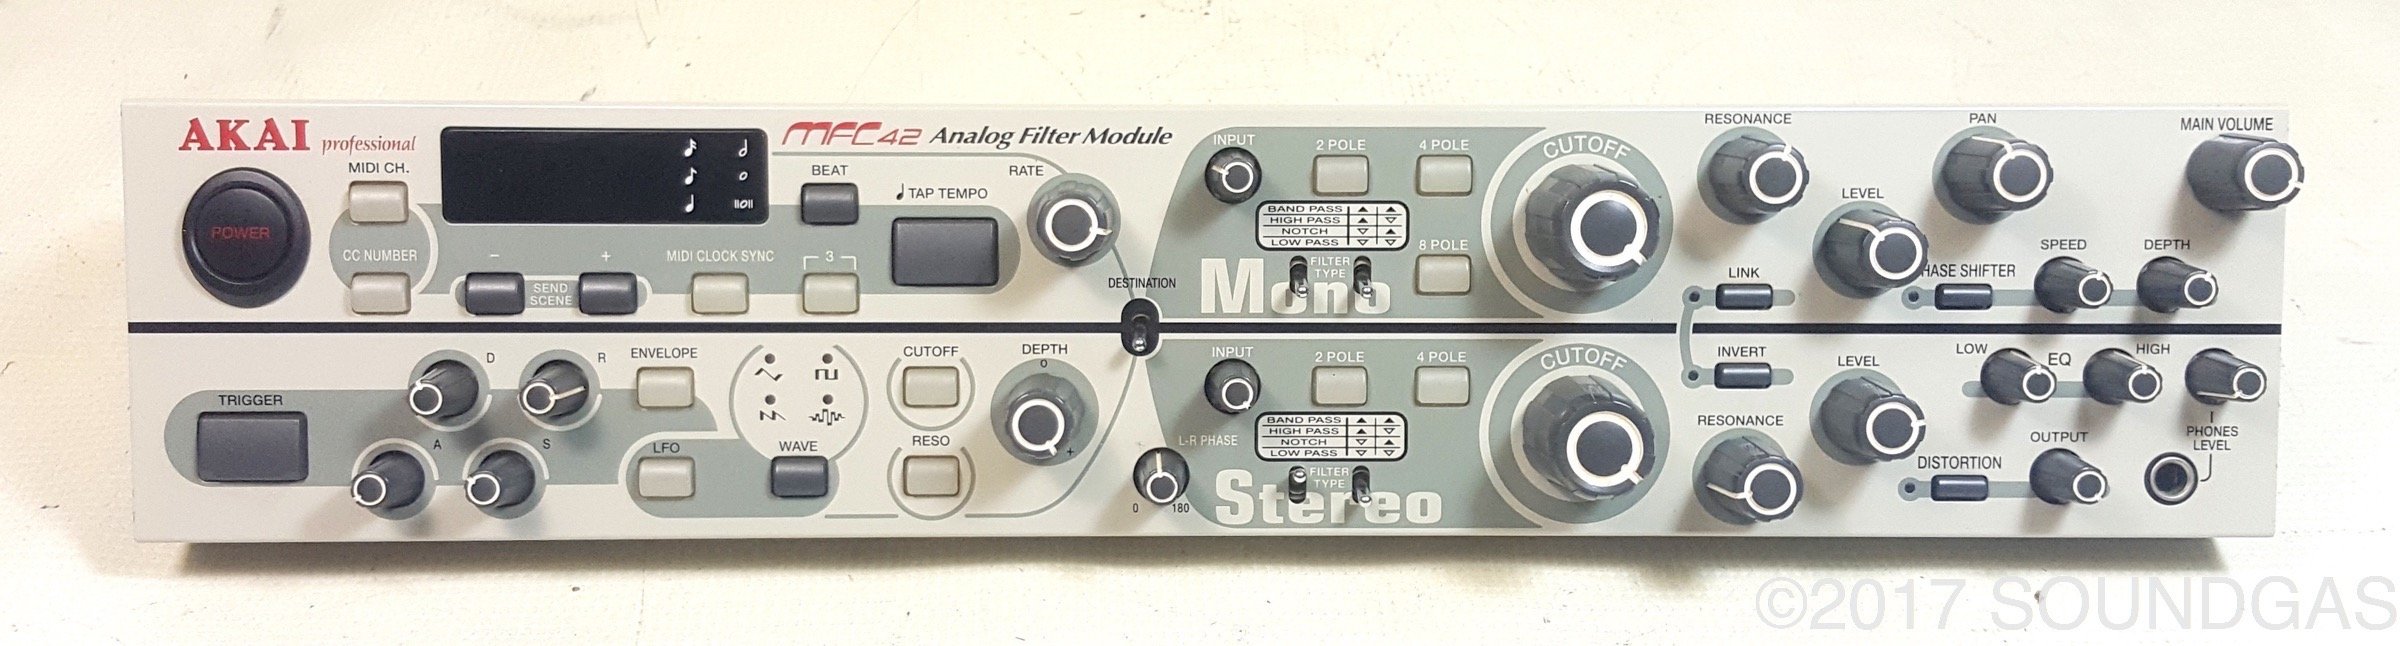 Akai MFC42 Analog Filter Module FOR SALE - Soundgas